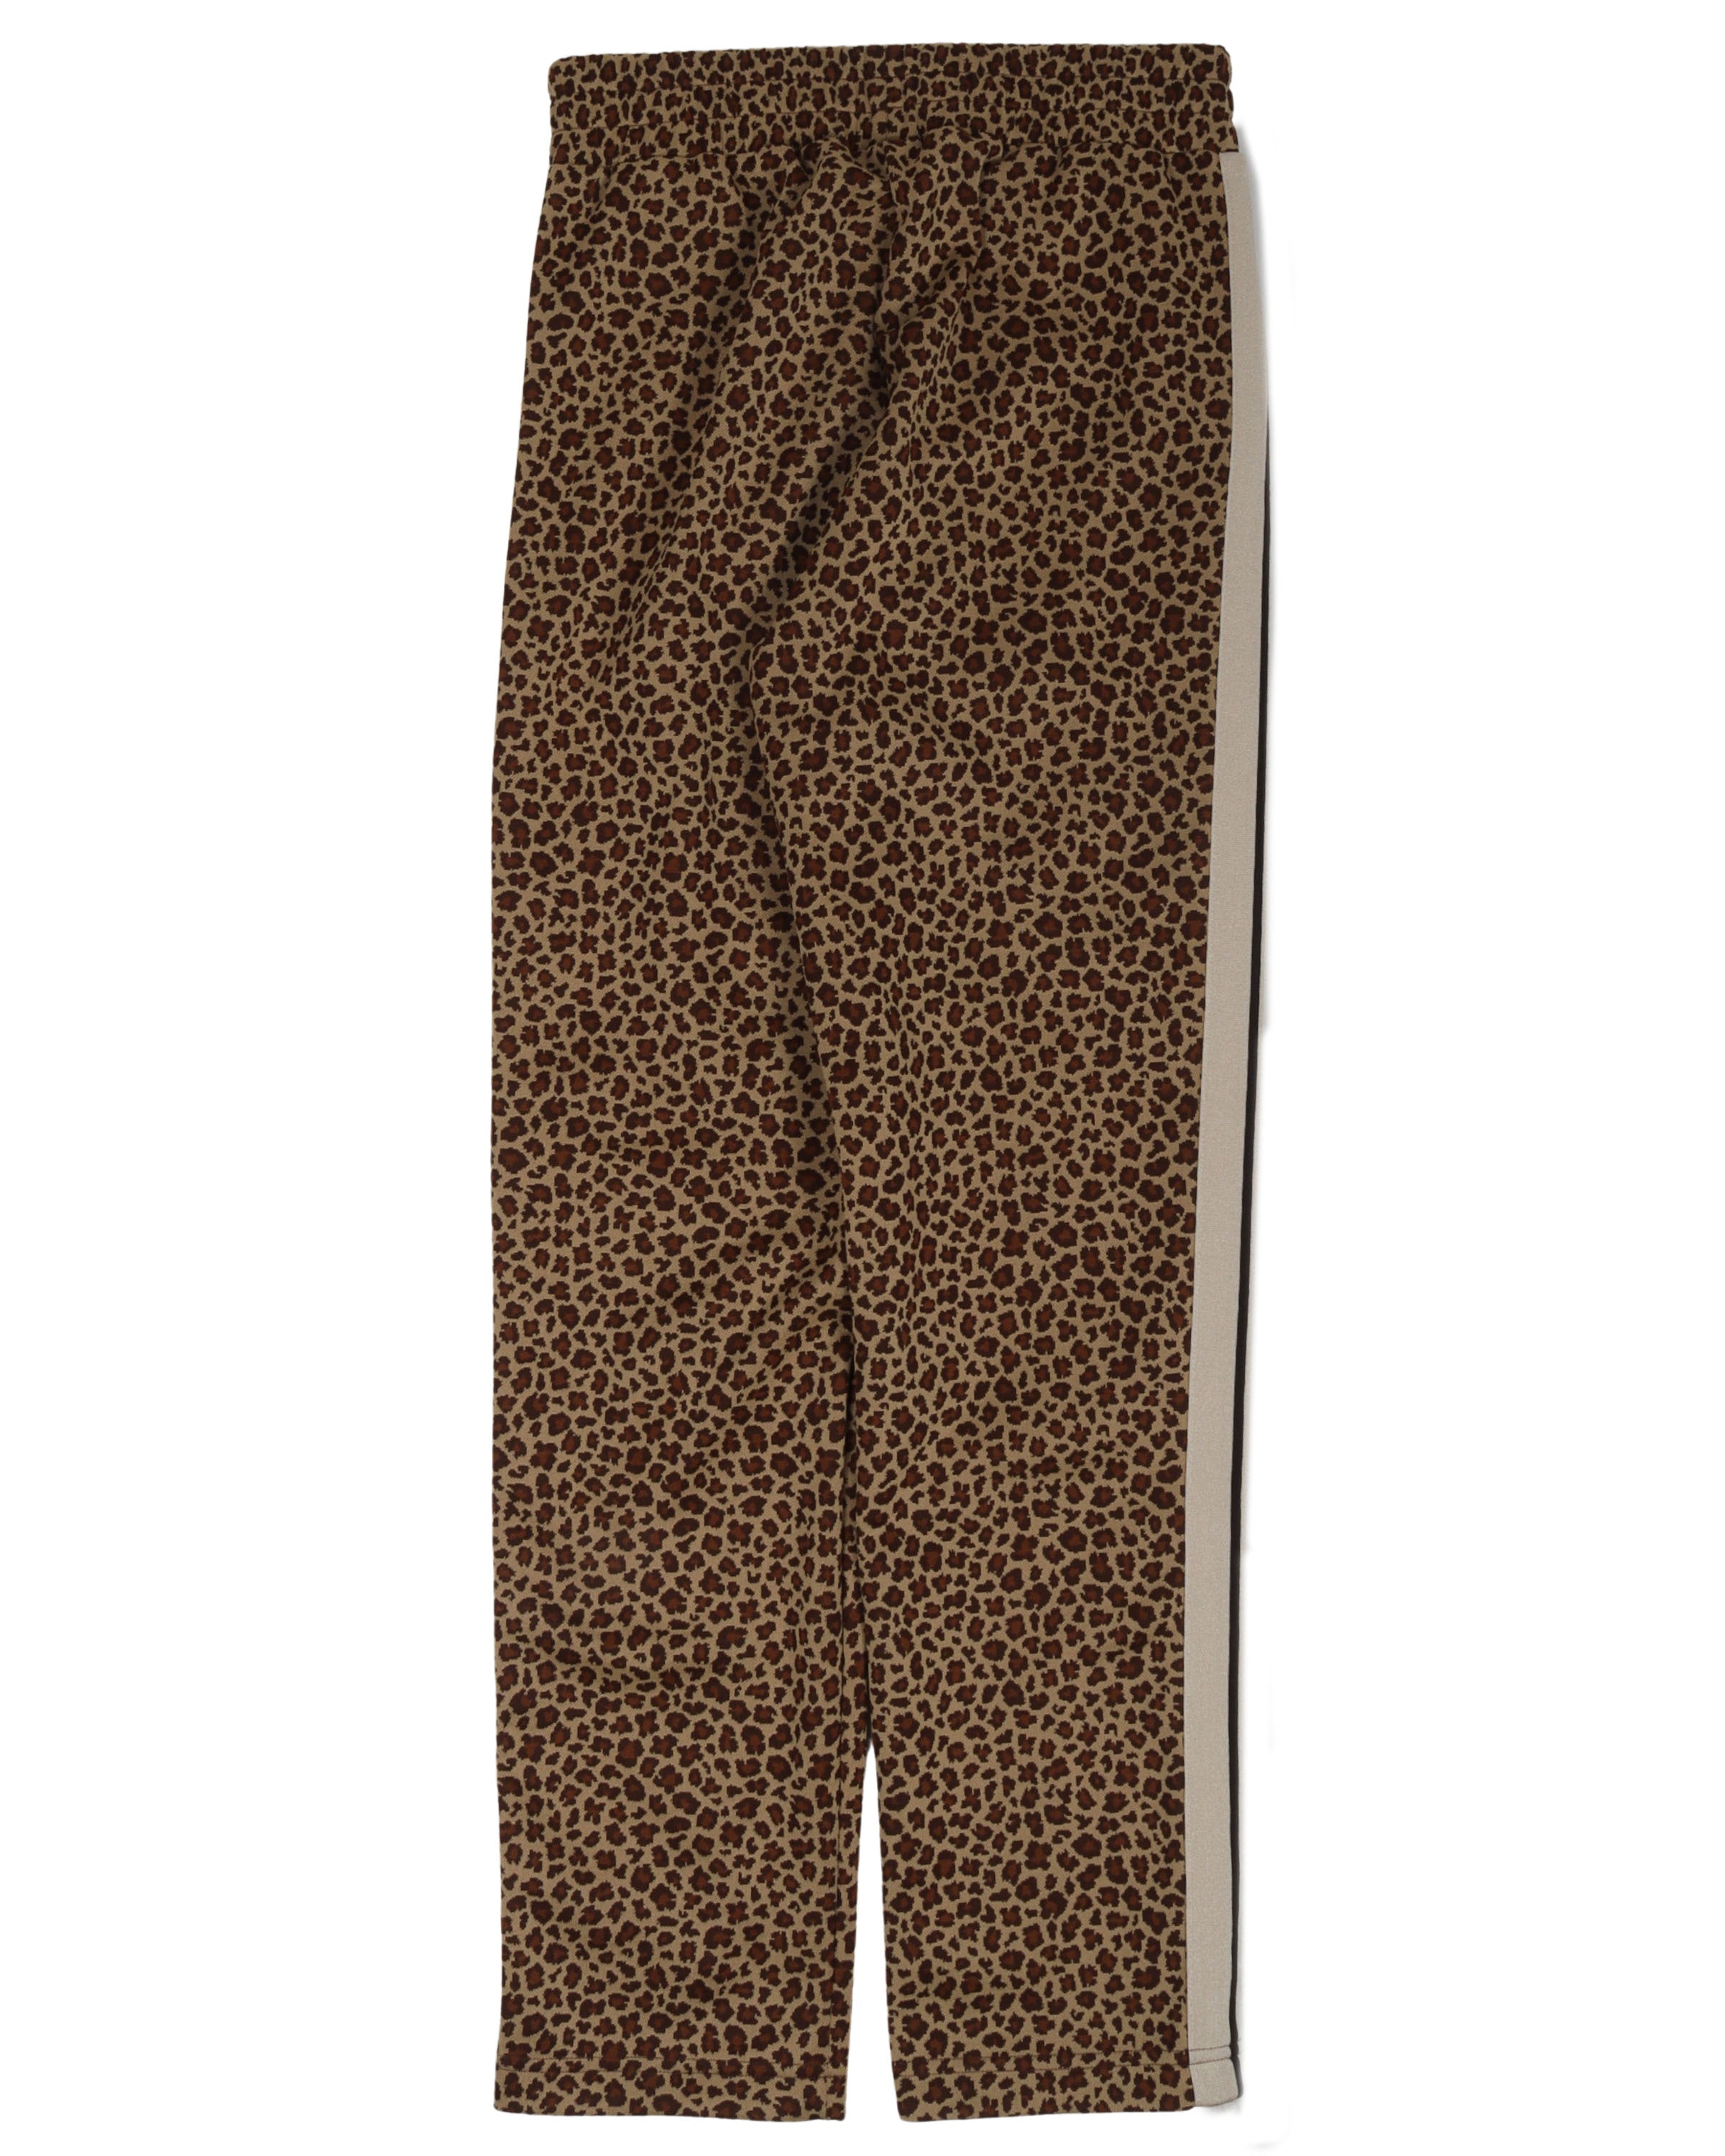 Leopard Print Track Pants